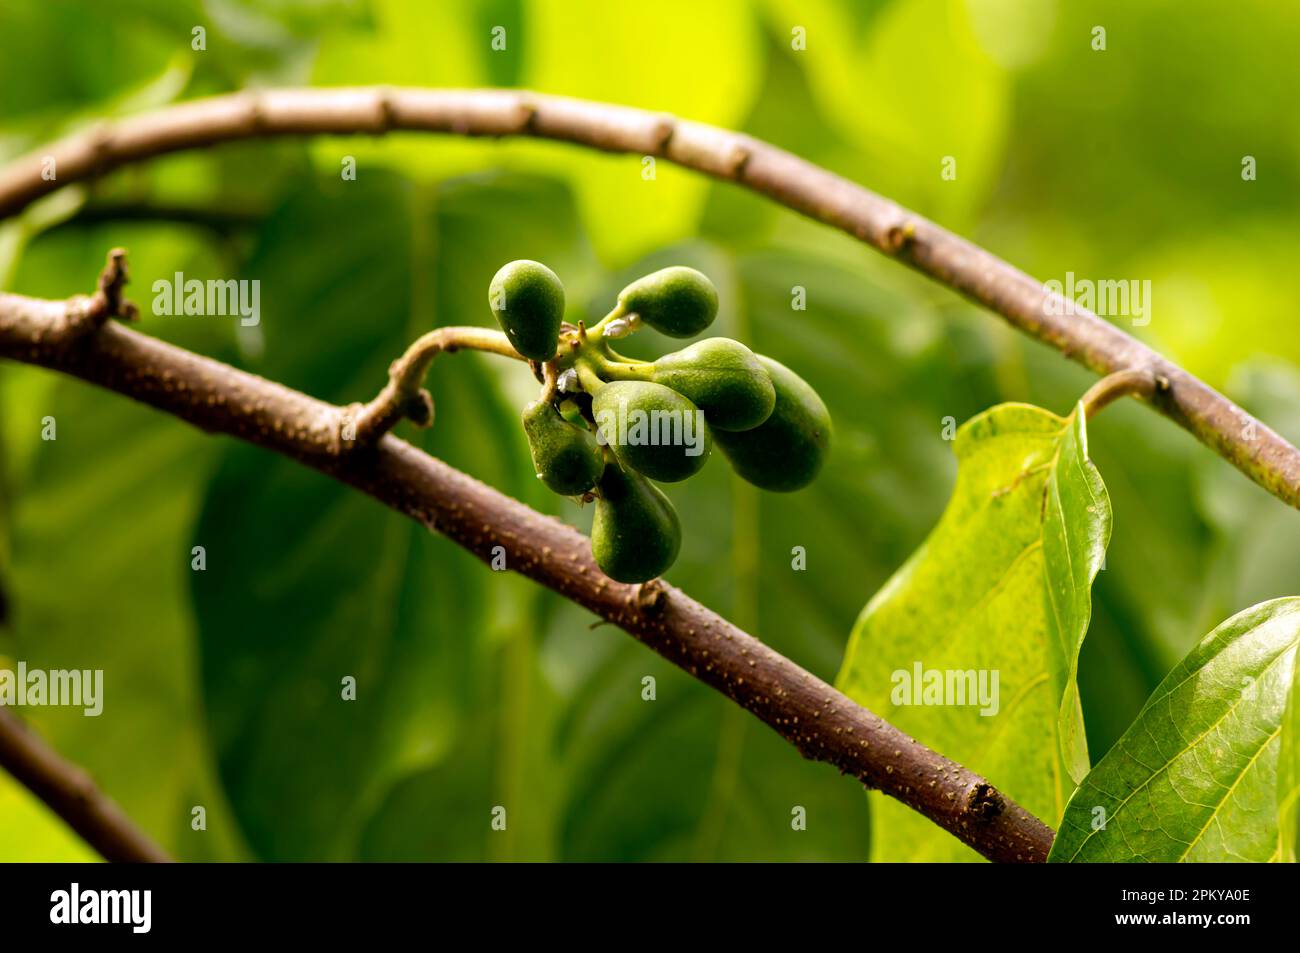 Cananga odorata seeds, known as the cananga, selected focus Stock Photo